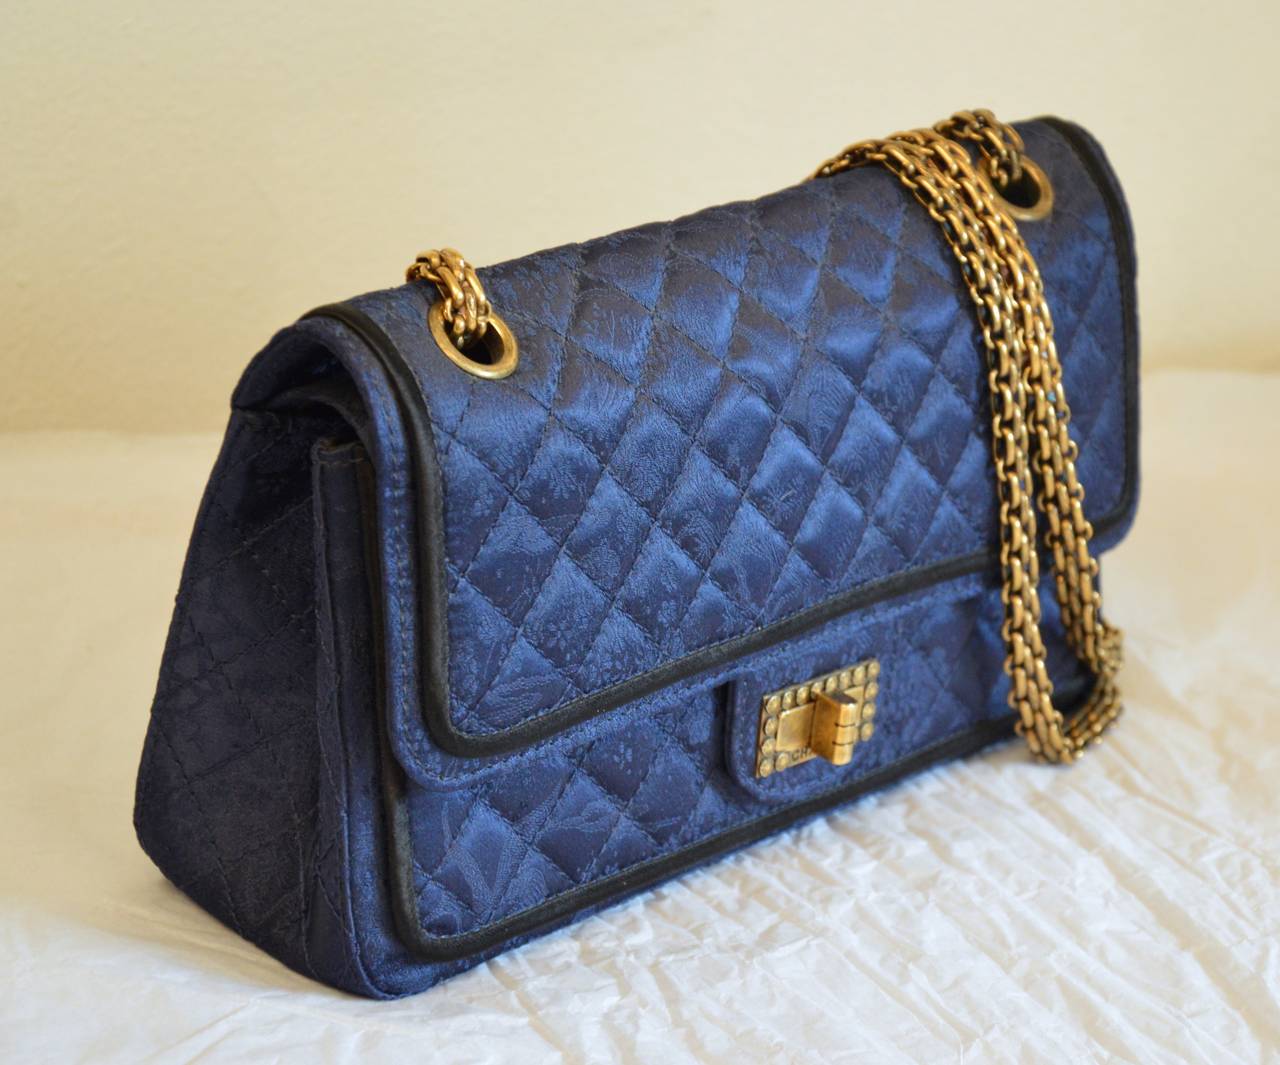 Chanel Paris-Pekin Collection Printed Night Blue Silk Satin Bag
Dimensions: L26cm * H15cm * W7.5 cm
Collector
antique gold chain shoulder strap: 108cm, 
2 flaps, one flap pocket in 1, 
3 inside pockets